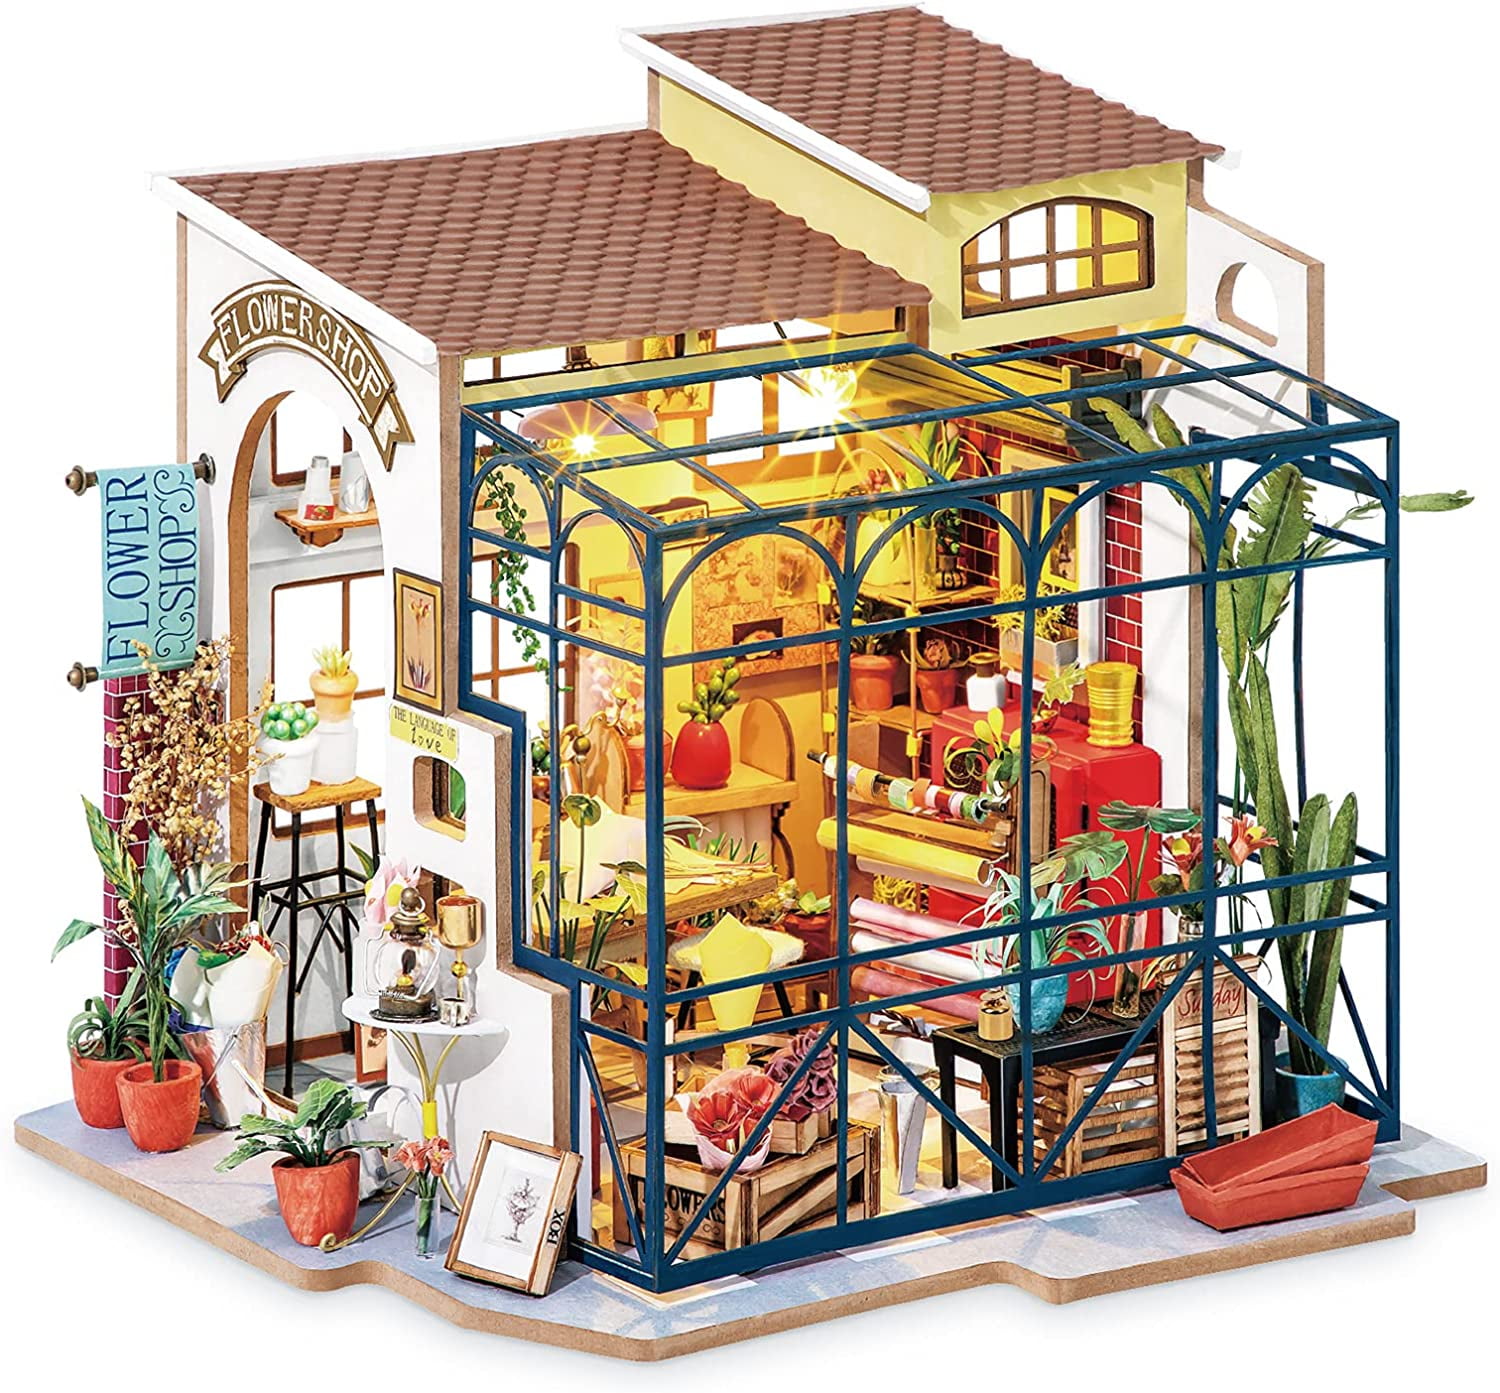 Miniature Home Depot Bucket for Dollhouses [CIM HomeDepot]